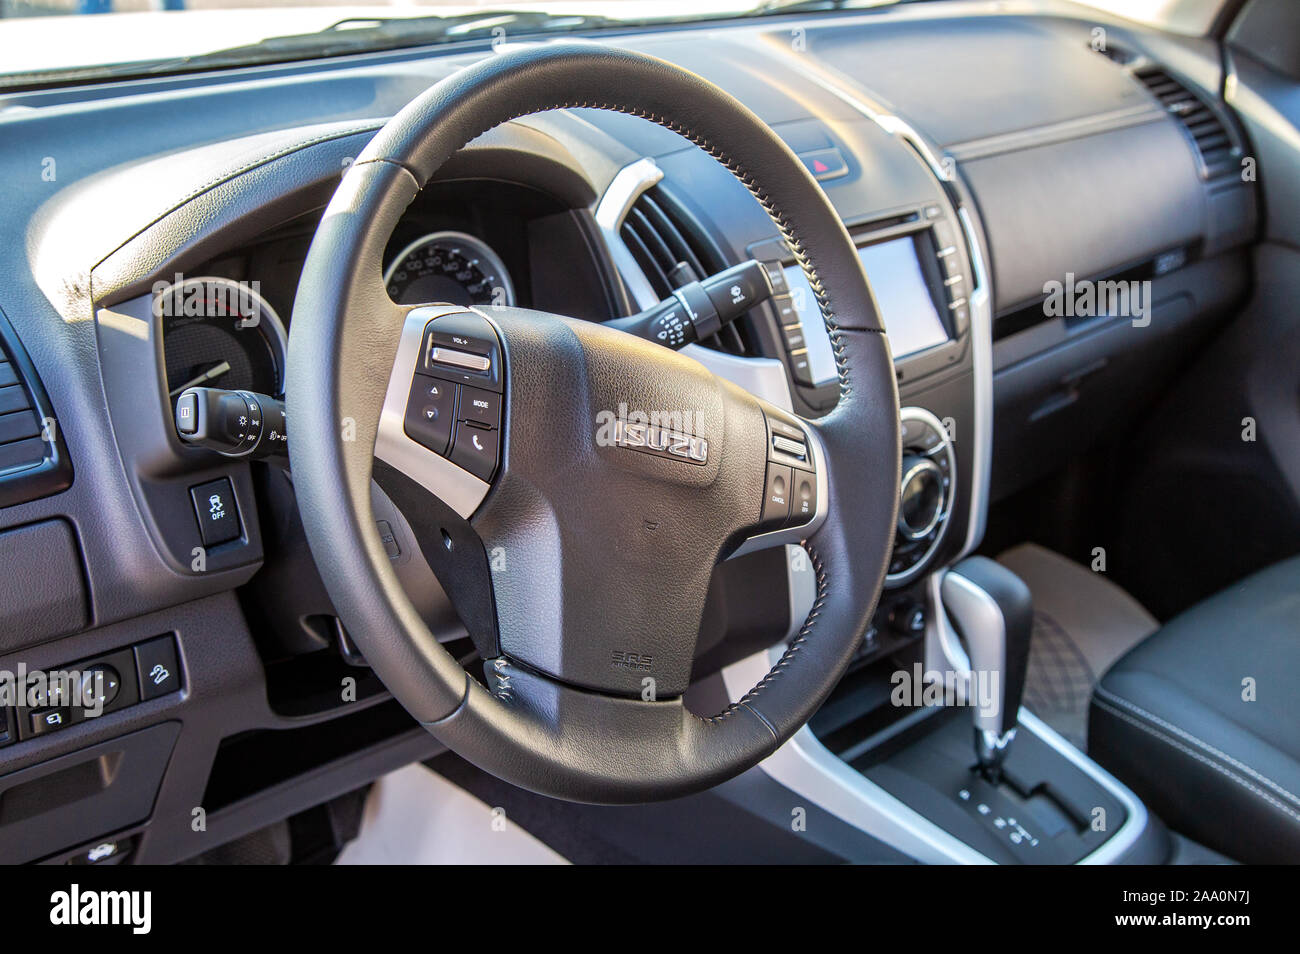 Samara, Russia - October 26, 2019: Interior design of Isuzu car, control board, steering wheel, upholstery Stock Photo